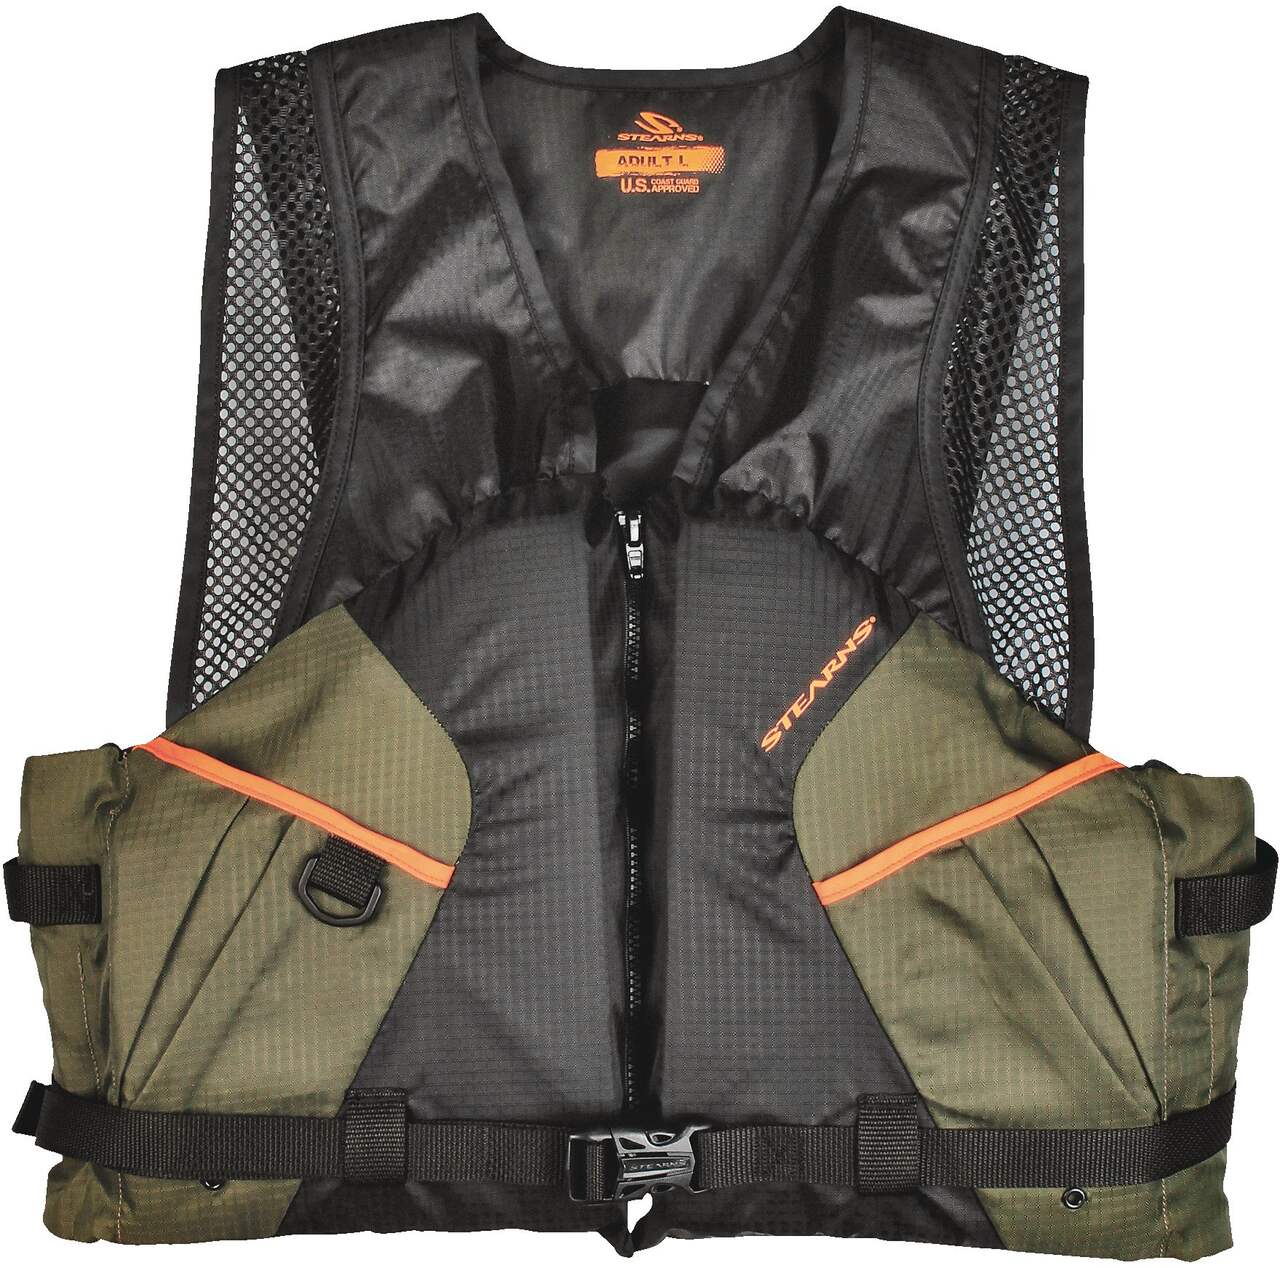 Stearns Comfort Fishing PFD/Paddling Vest